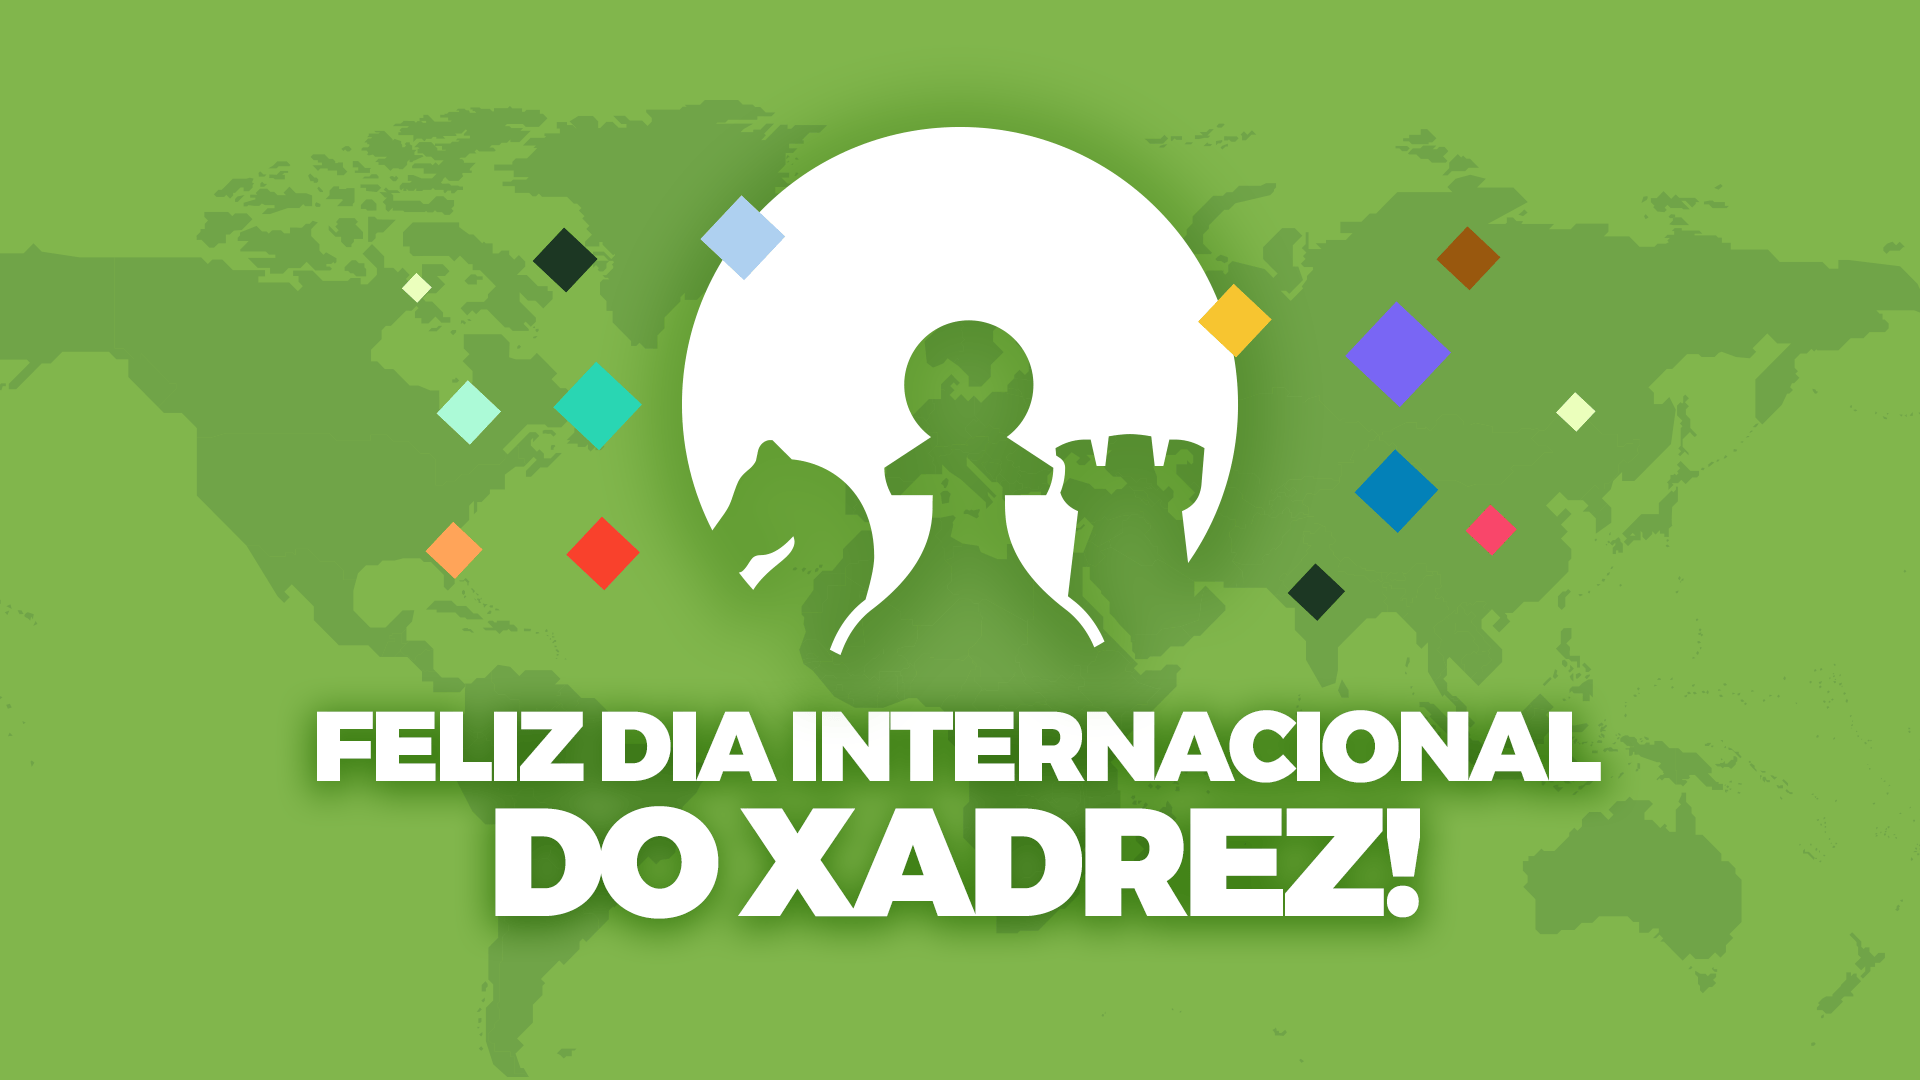 Xadrez Brasil, Instagram, Facebook, Twitch